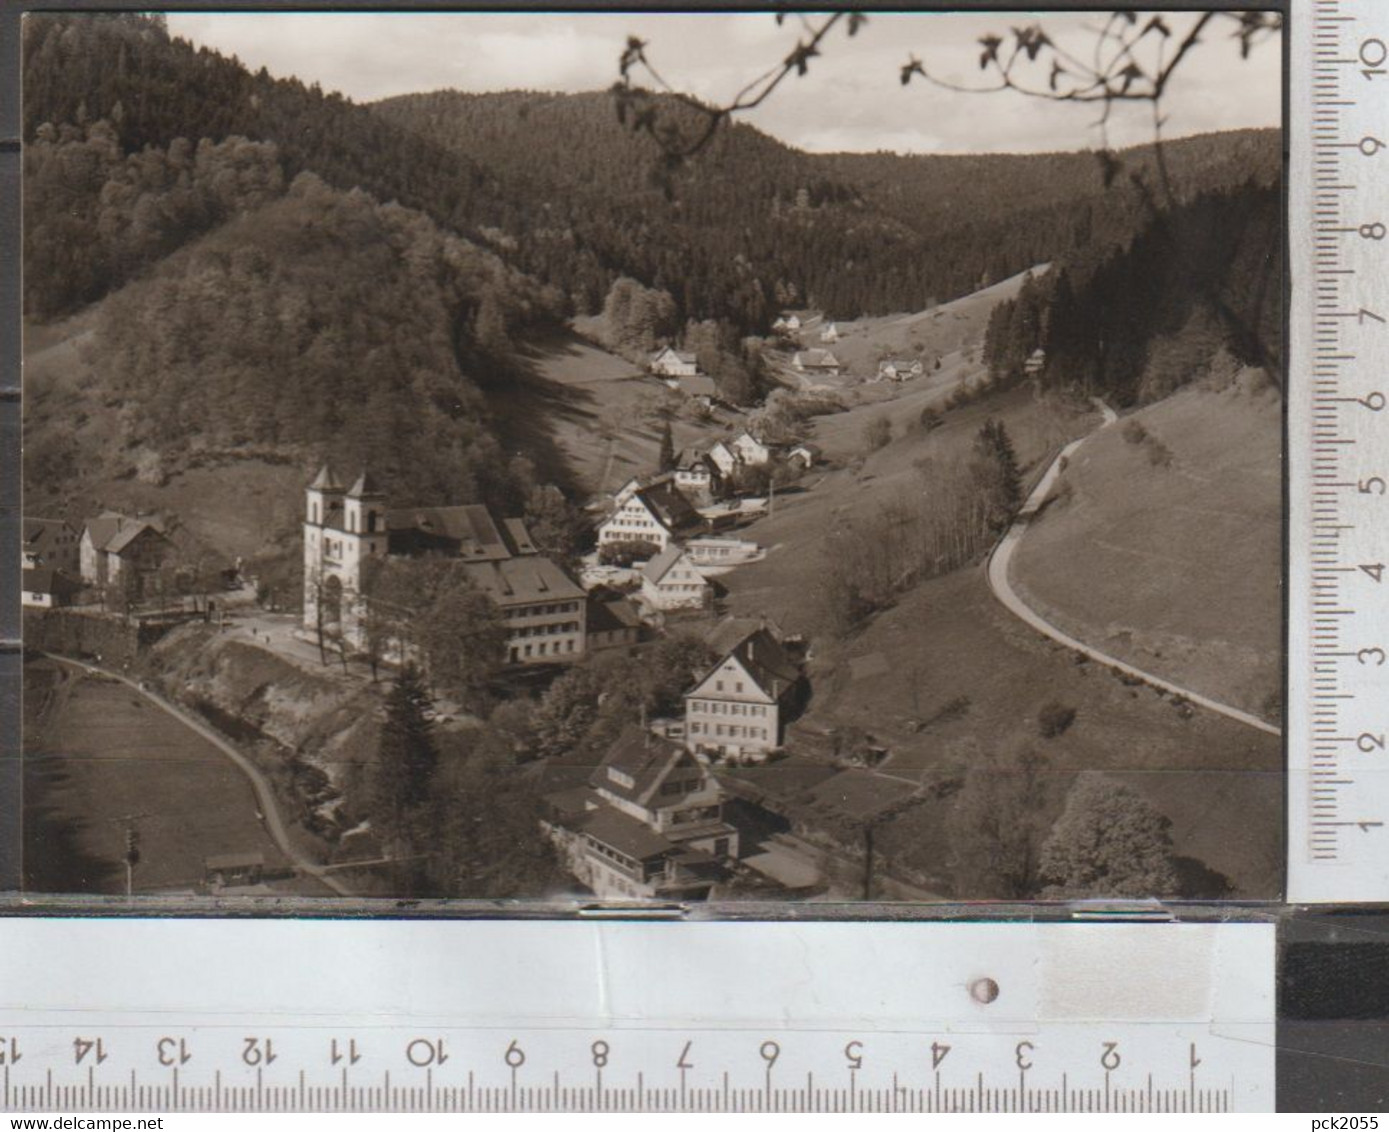 Bad Rippoldsau  Klösterle Mit Reichenbachtal Fotokarte Nicht Gelaufen ( AK 477 ) - Bad Rippoldsau - Schapbach